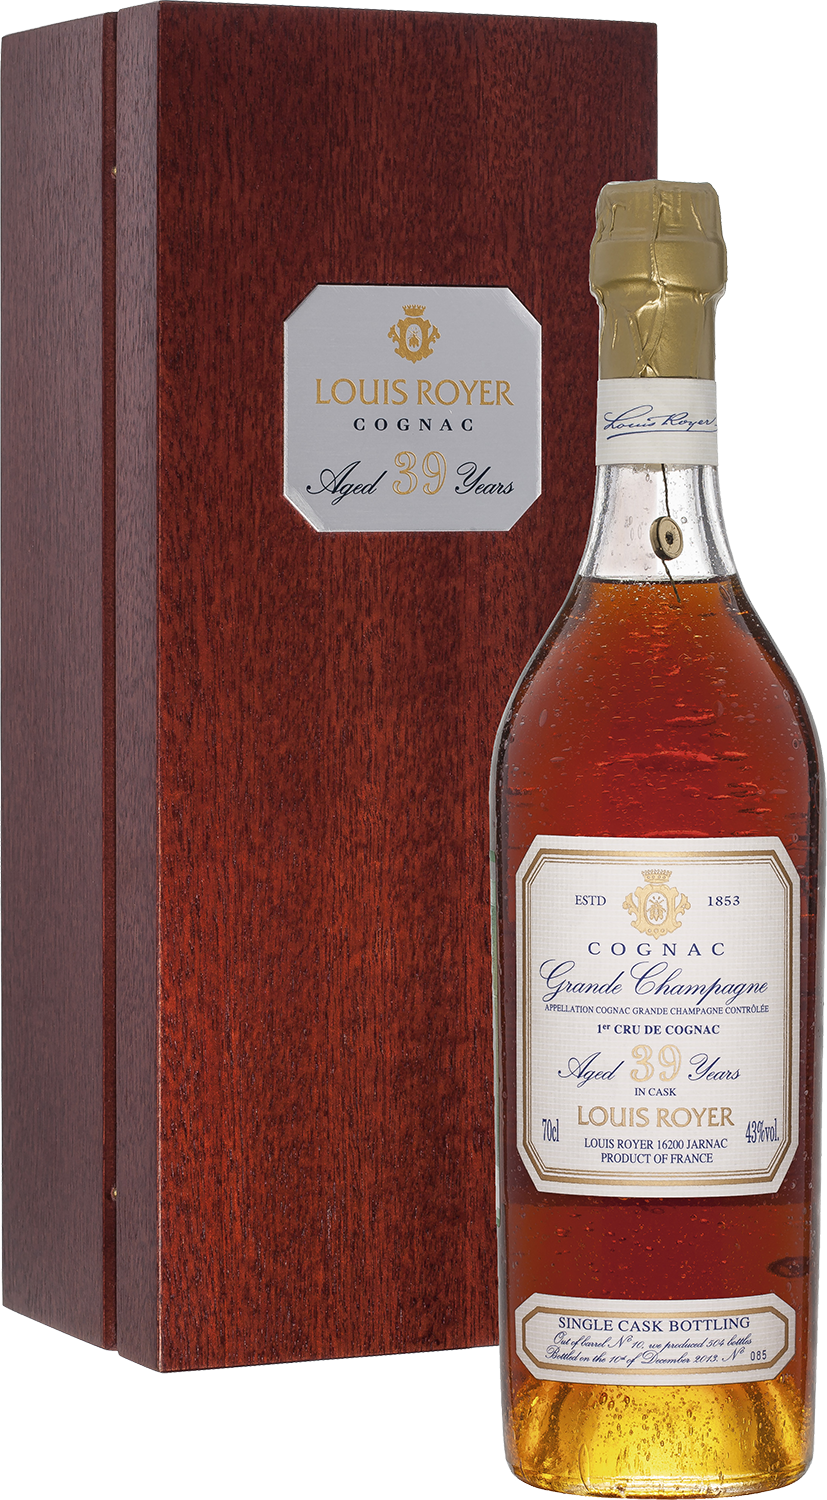 Cognac Louis Royer 39 years Grande Champagne (gift box) park extra grande champagne cognac gift box